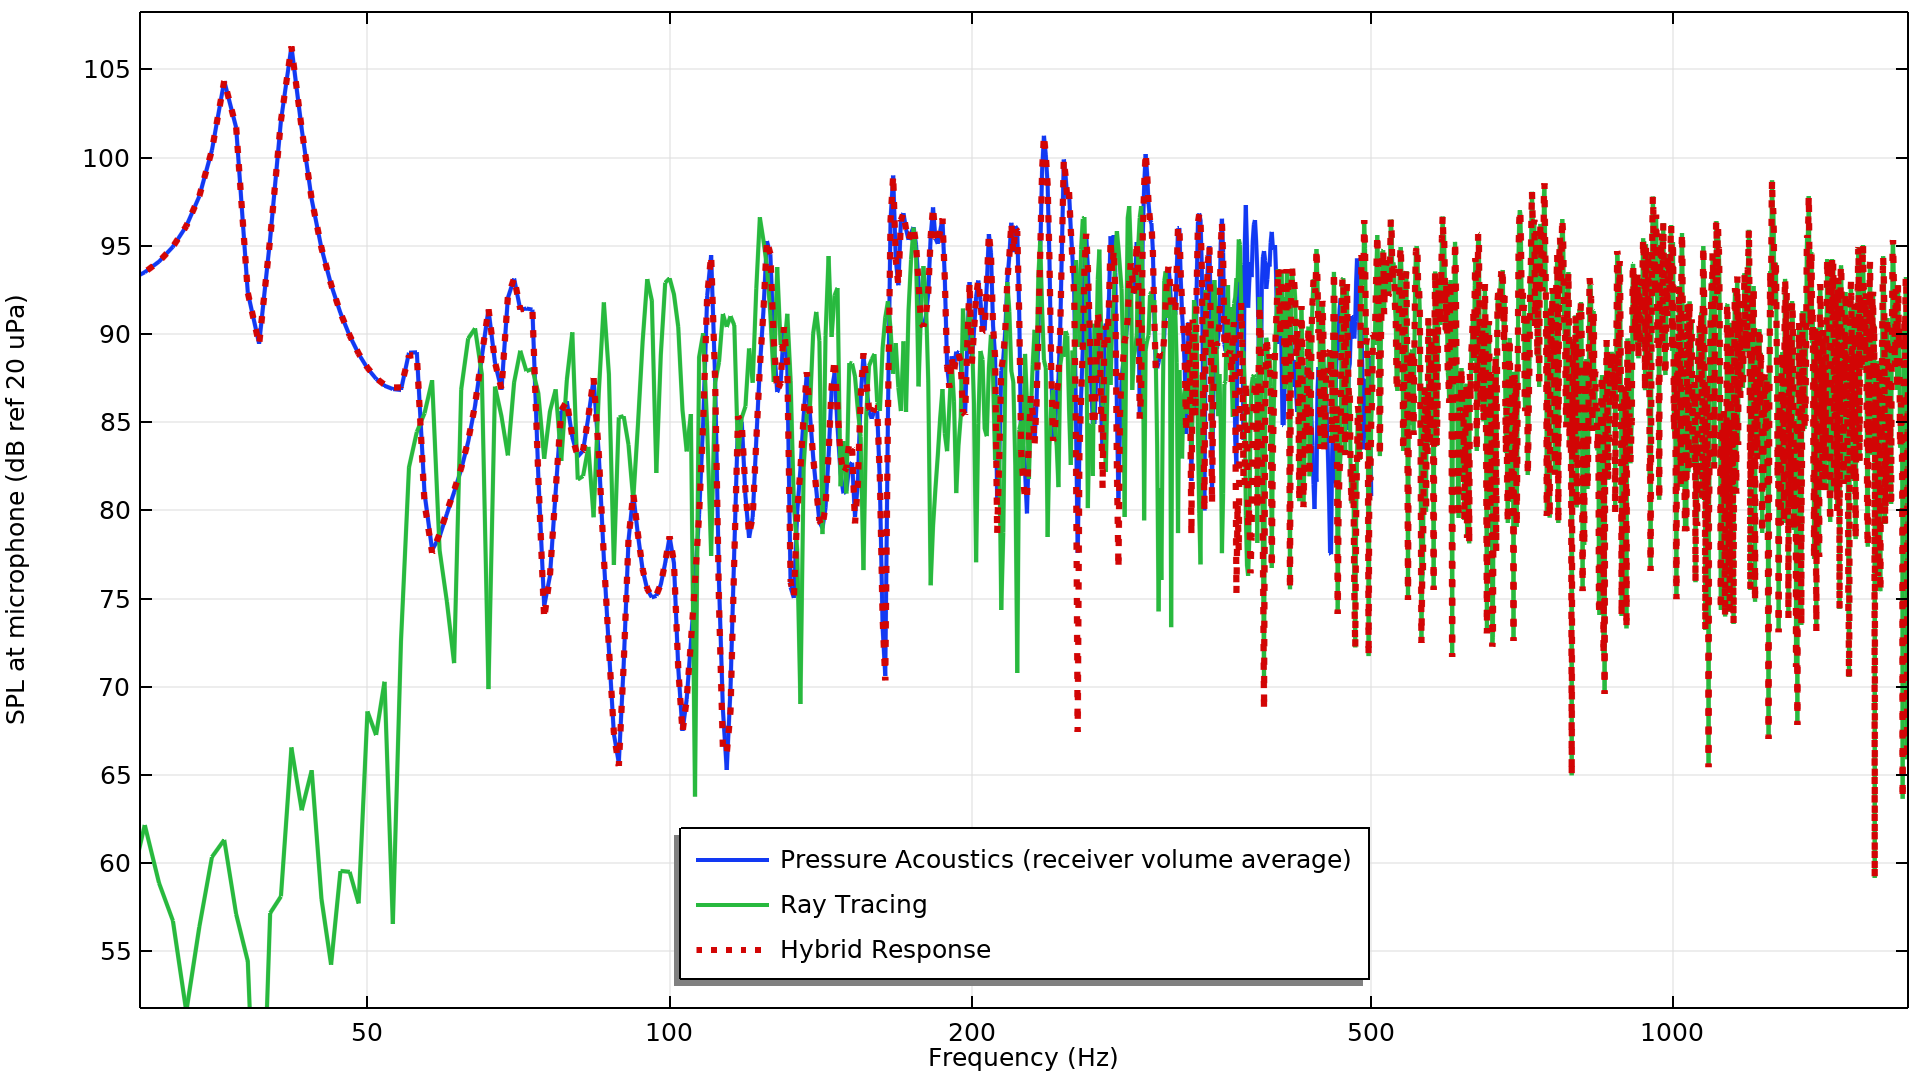 X轴为频率（Hz），Y轴为麦克风处的声压级（分贝的参考值为20 μPa）的一维图。重点显示的蓝线、绿线和红色虚线，分别代表压力声学（接收器体积平均值）、射线追踪和混合响应。